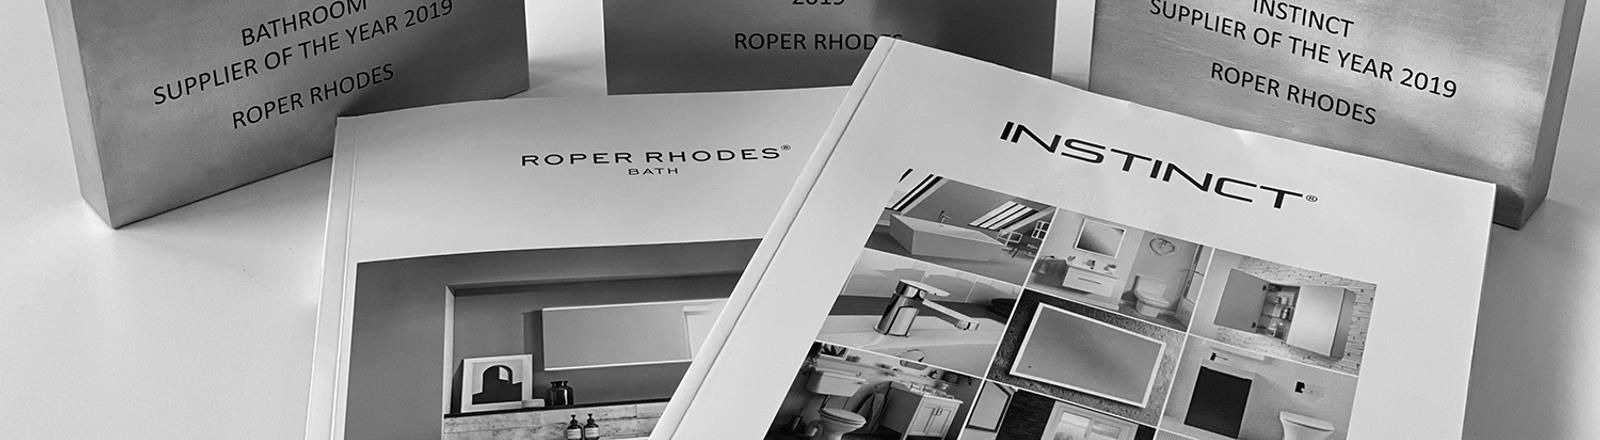 Roper Rhodes Ltd win the triple at the PHG 2019 Awards.